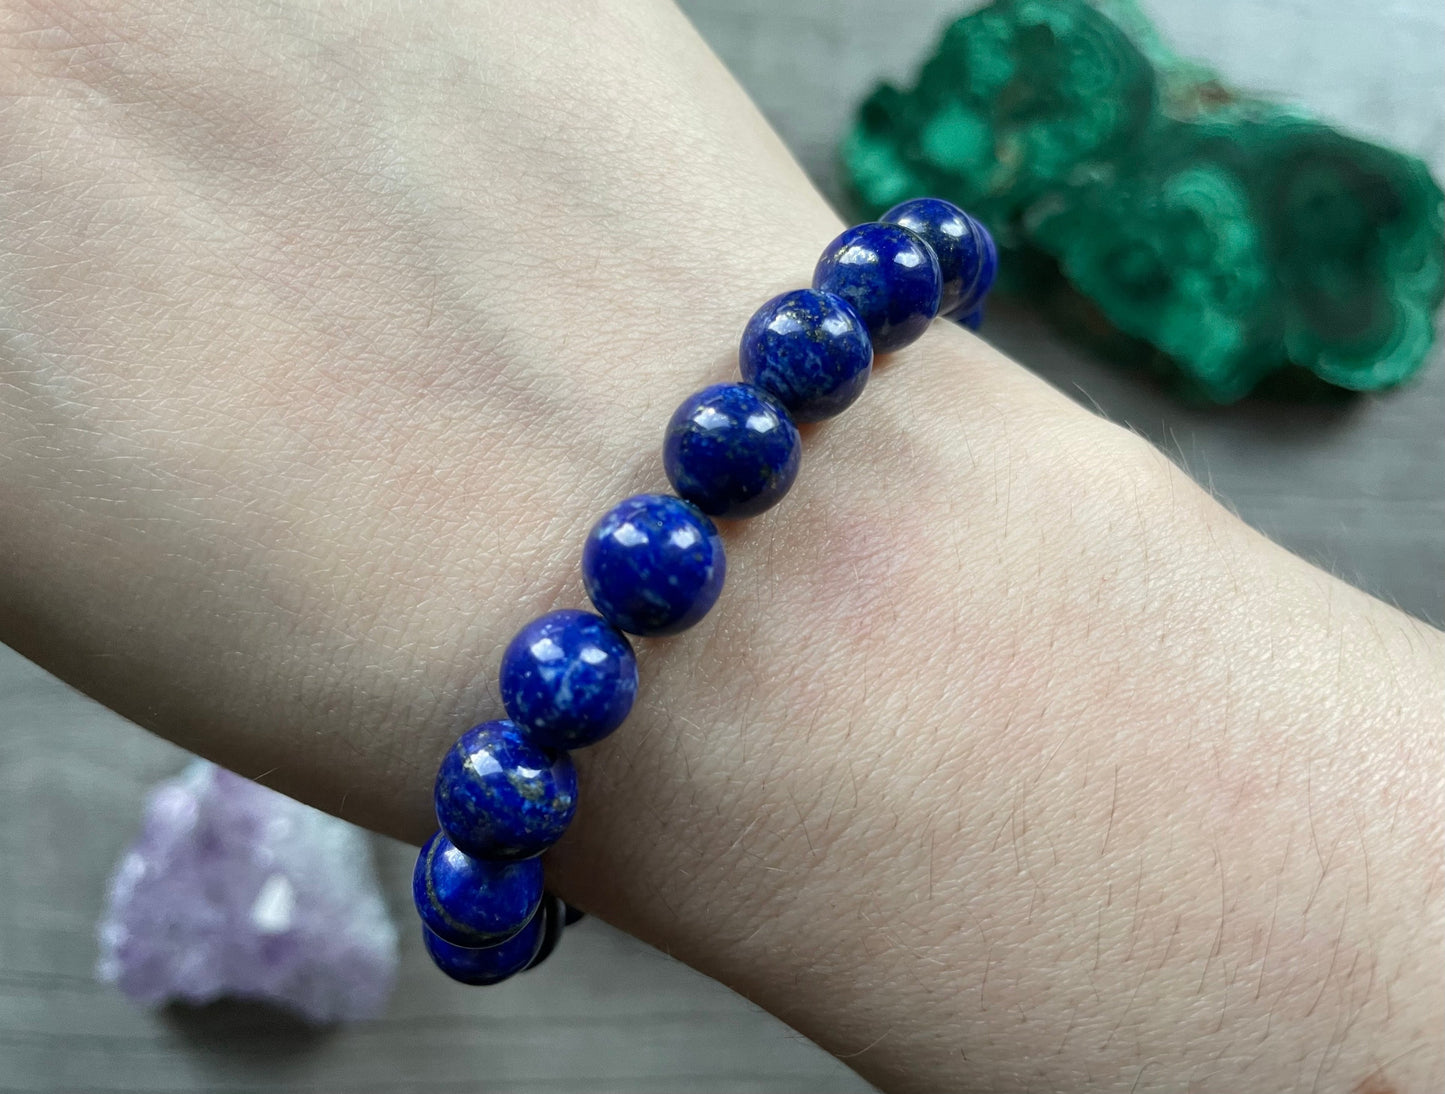 Pictured is a lapis lazuli bead bracelet.